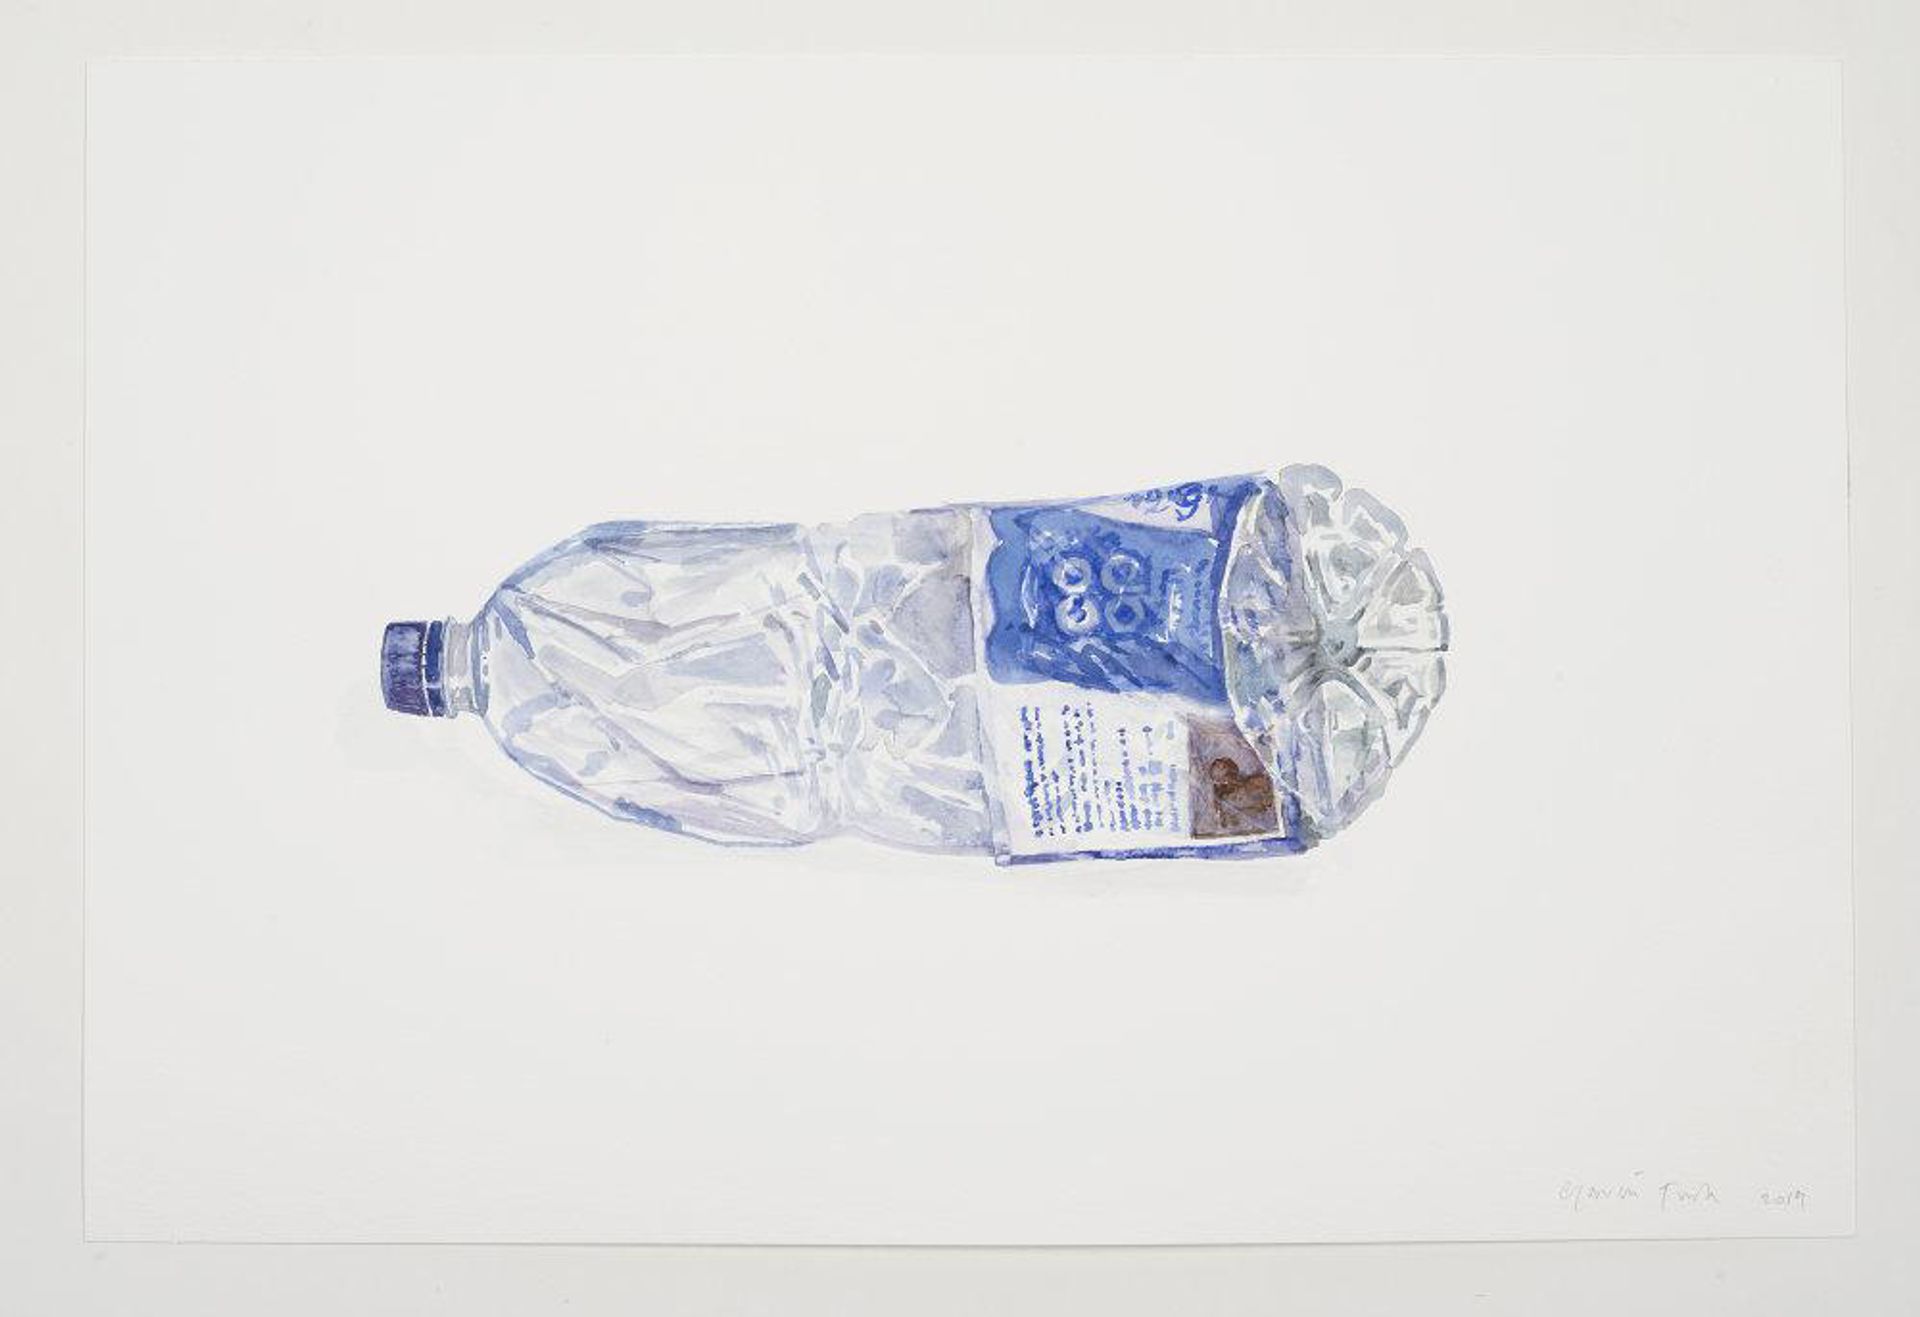 Gavin Turk's Water Bottle Bottle (2019) Courtesy of Gavin Turk/Reflexamsterdam.com